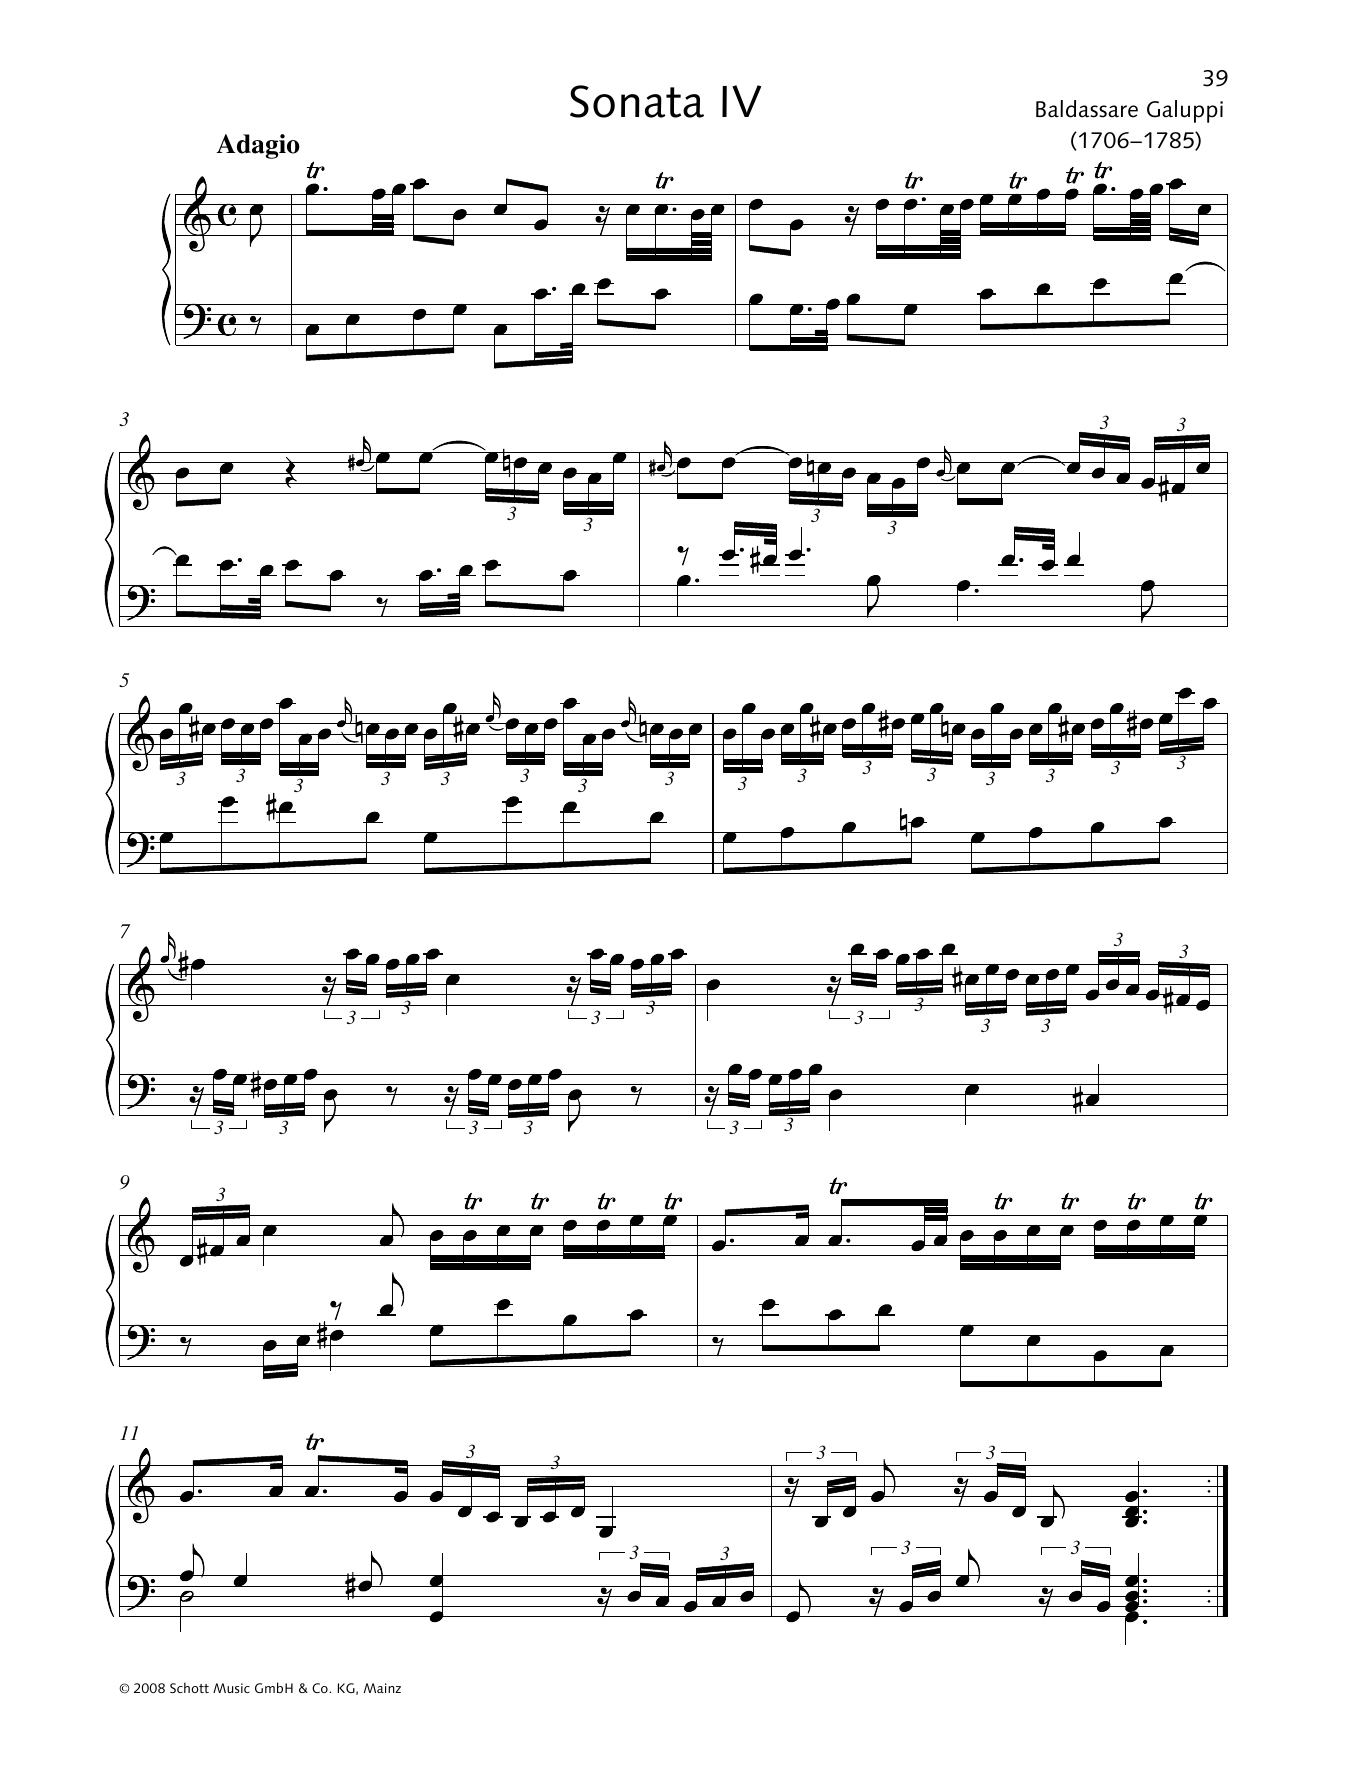 Baldassare Galuppi Sonata IV C major Sheet Music Notes & Chords for Piano Solo - Download or Print PDF